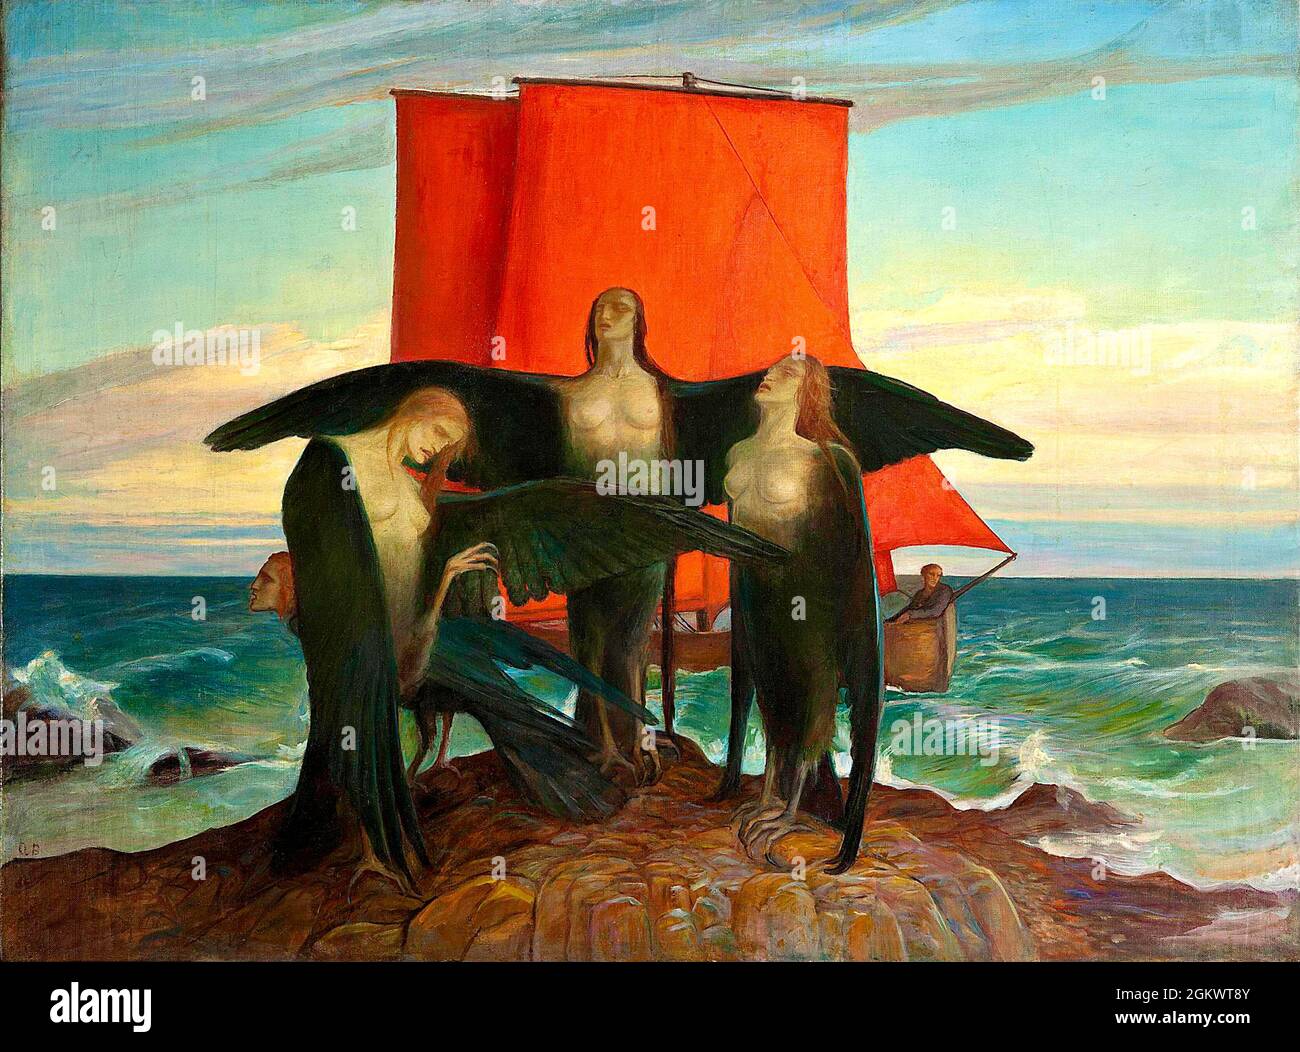 Anna Berent - scène symbolique au bord de la mer Banque D'Images